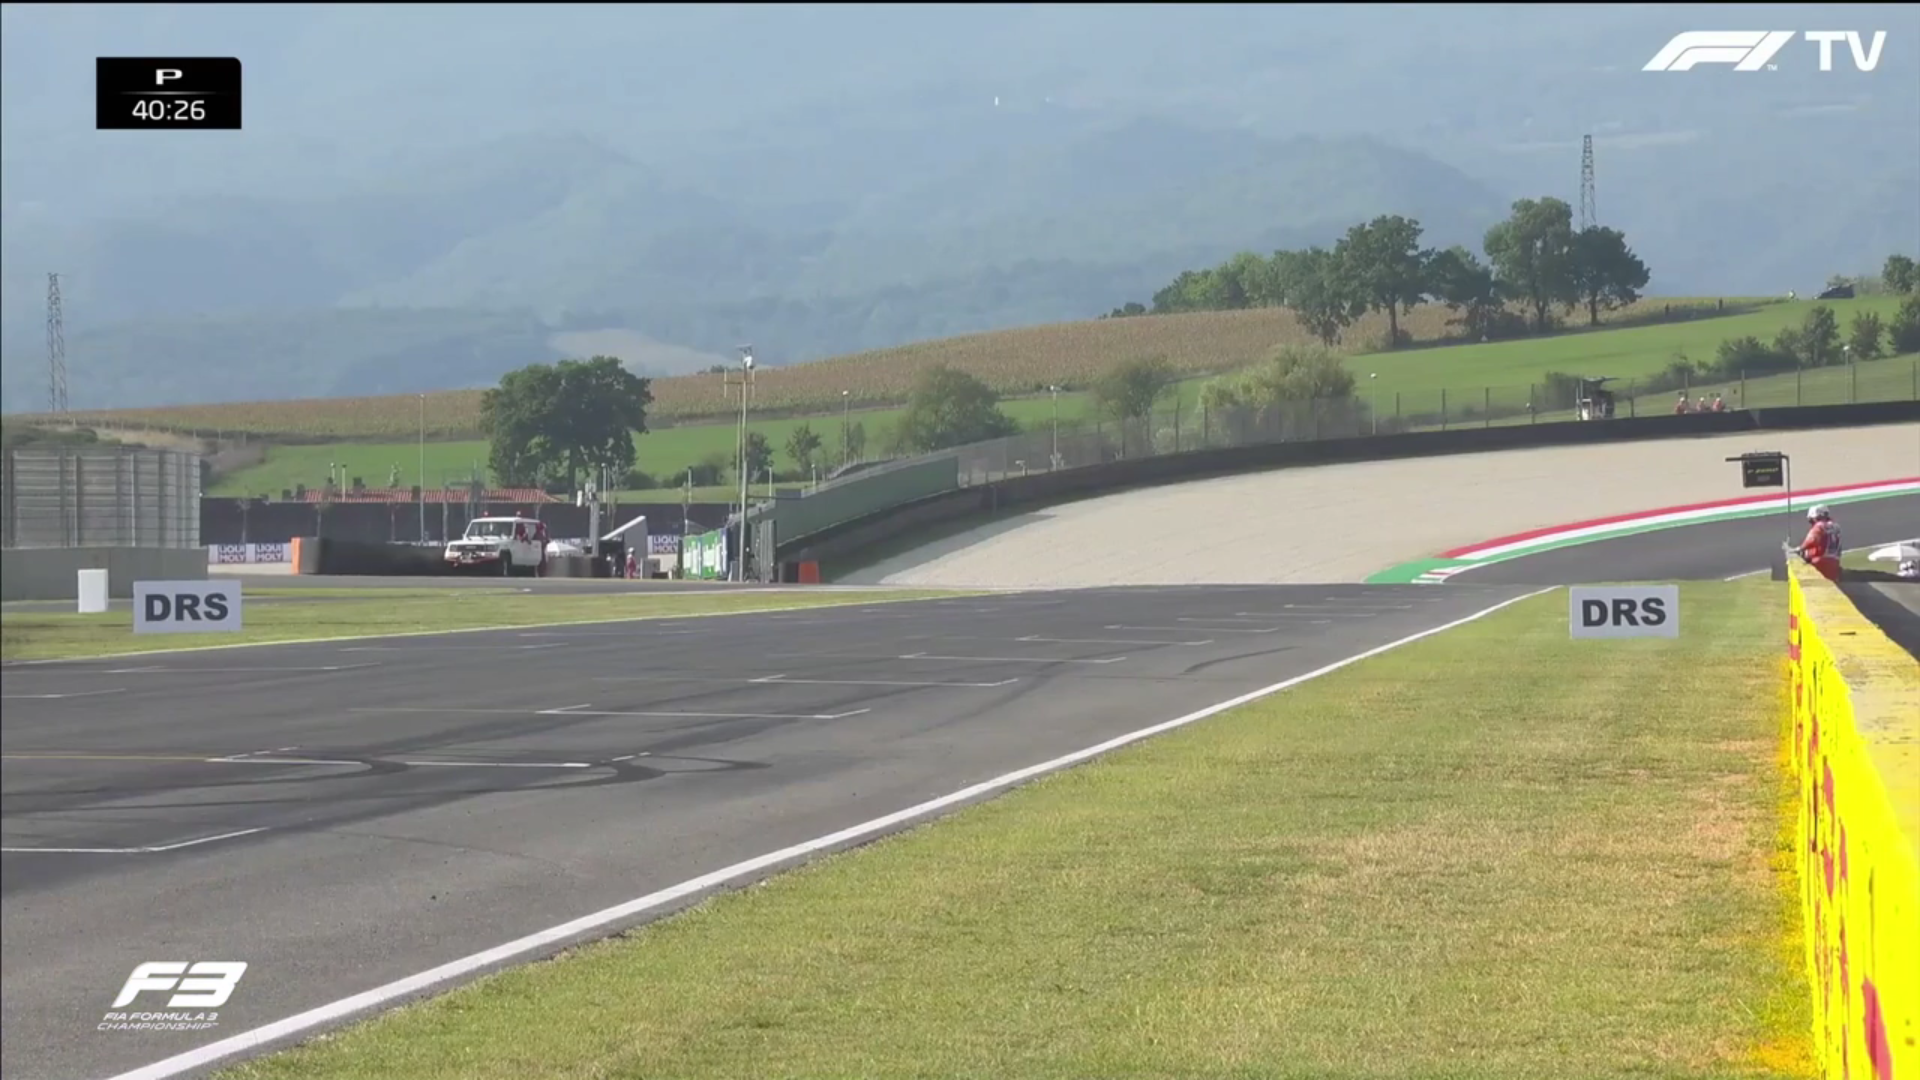 F1 drivers discuss nuances of Mugello circuit ahead of Tuscan GP